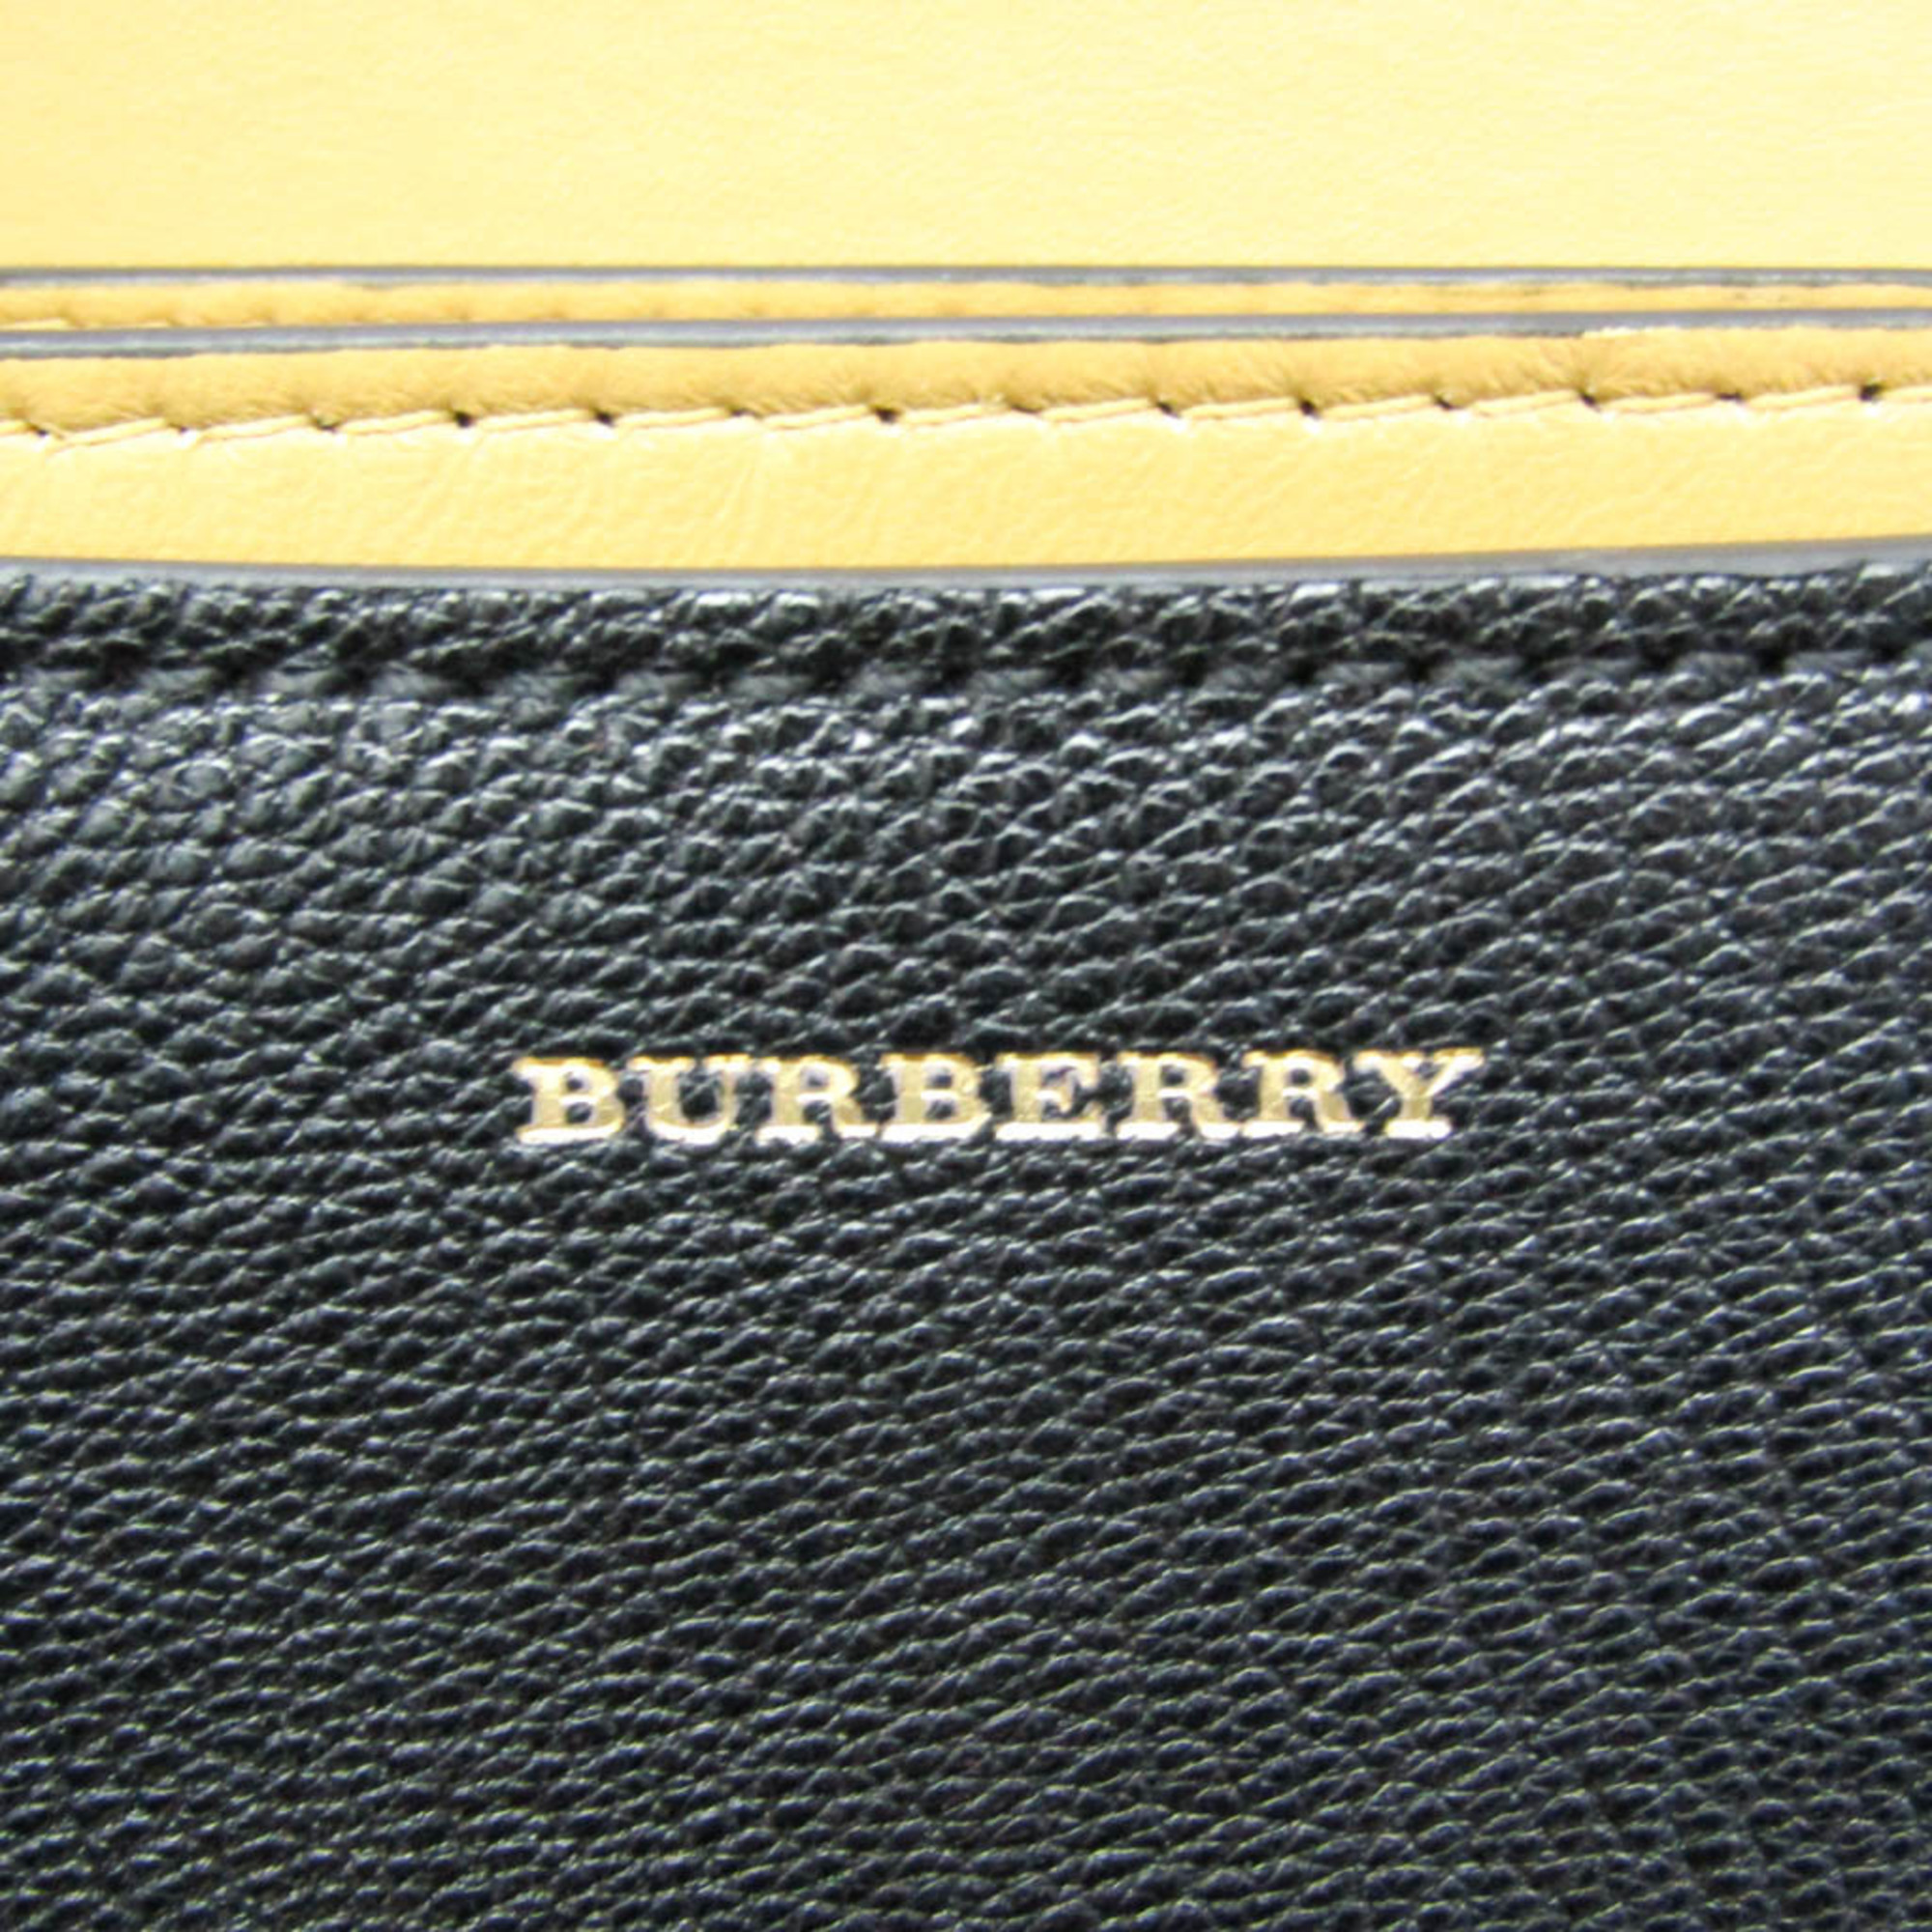 Burberry Compact Chain Shoulder Bag Women's Leather Shoulder Bag Black